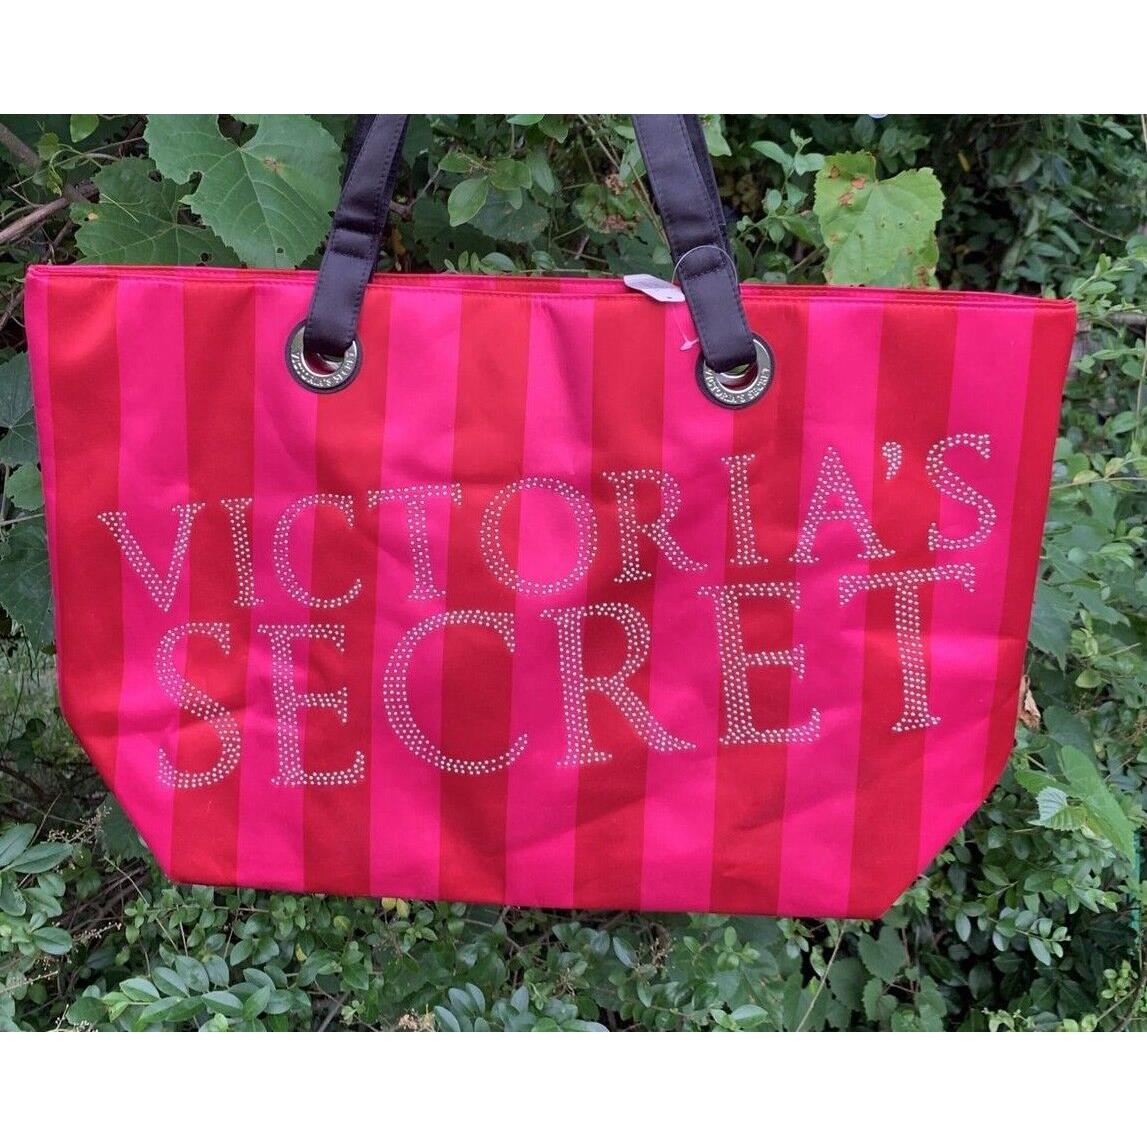 Victoria Secret Shoulder Bag